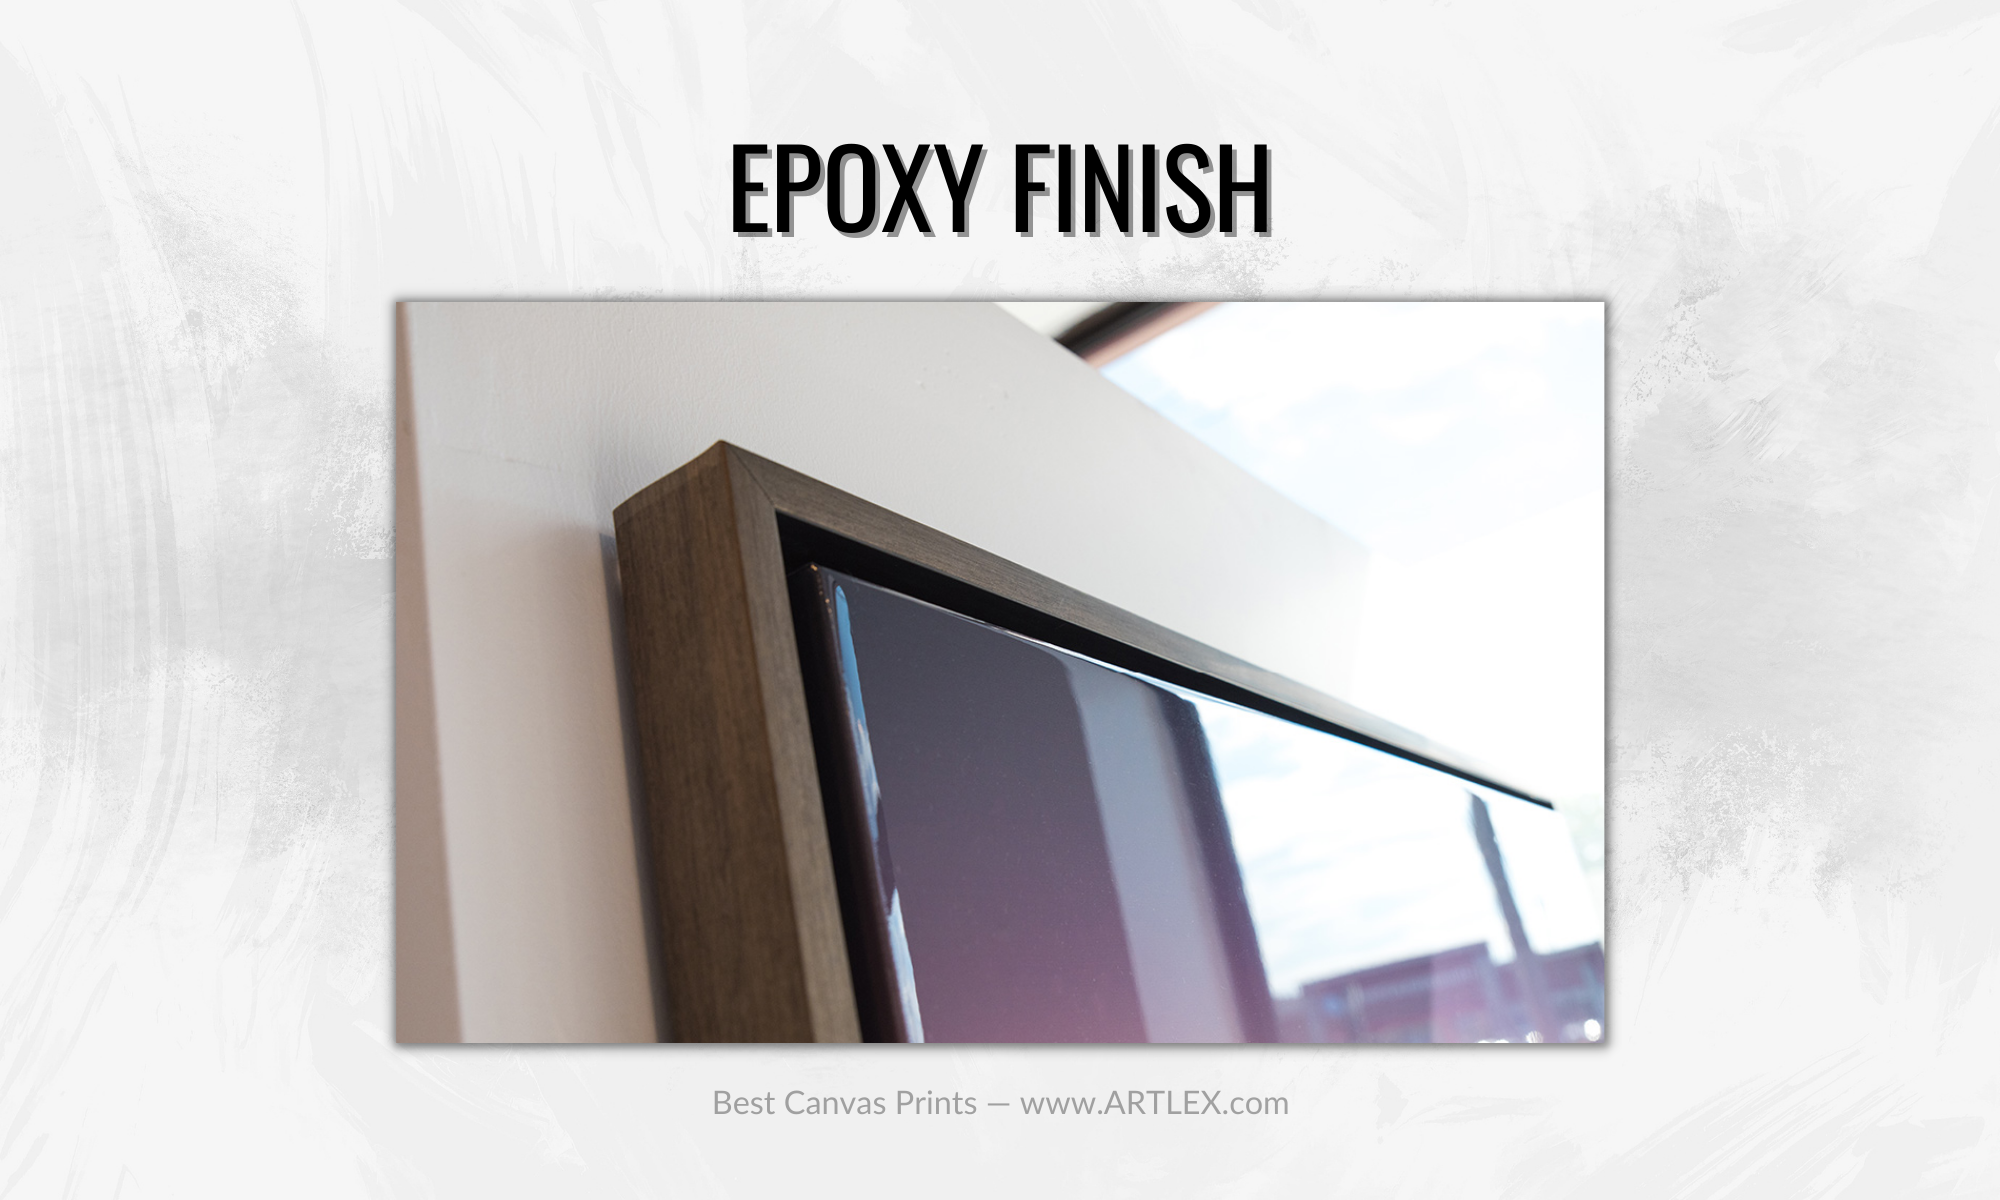 Epoxy Finish for Canvas Prints